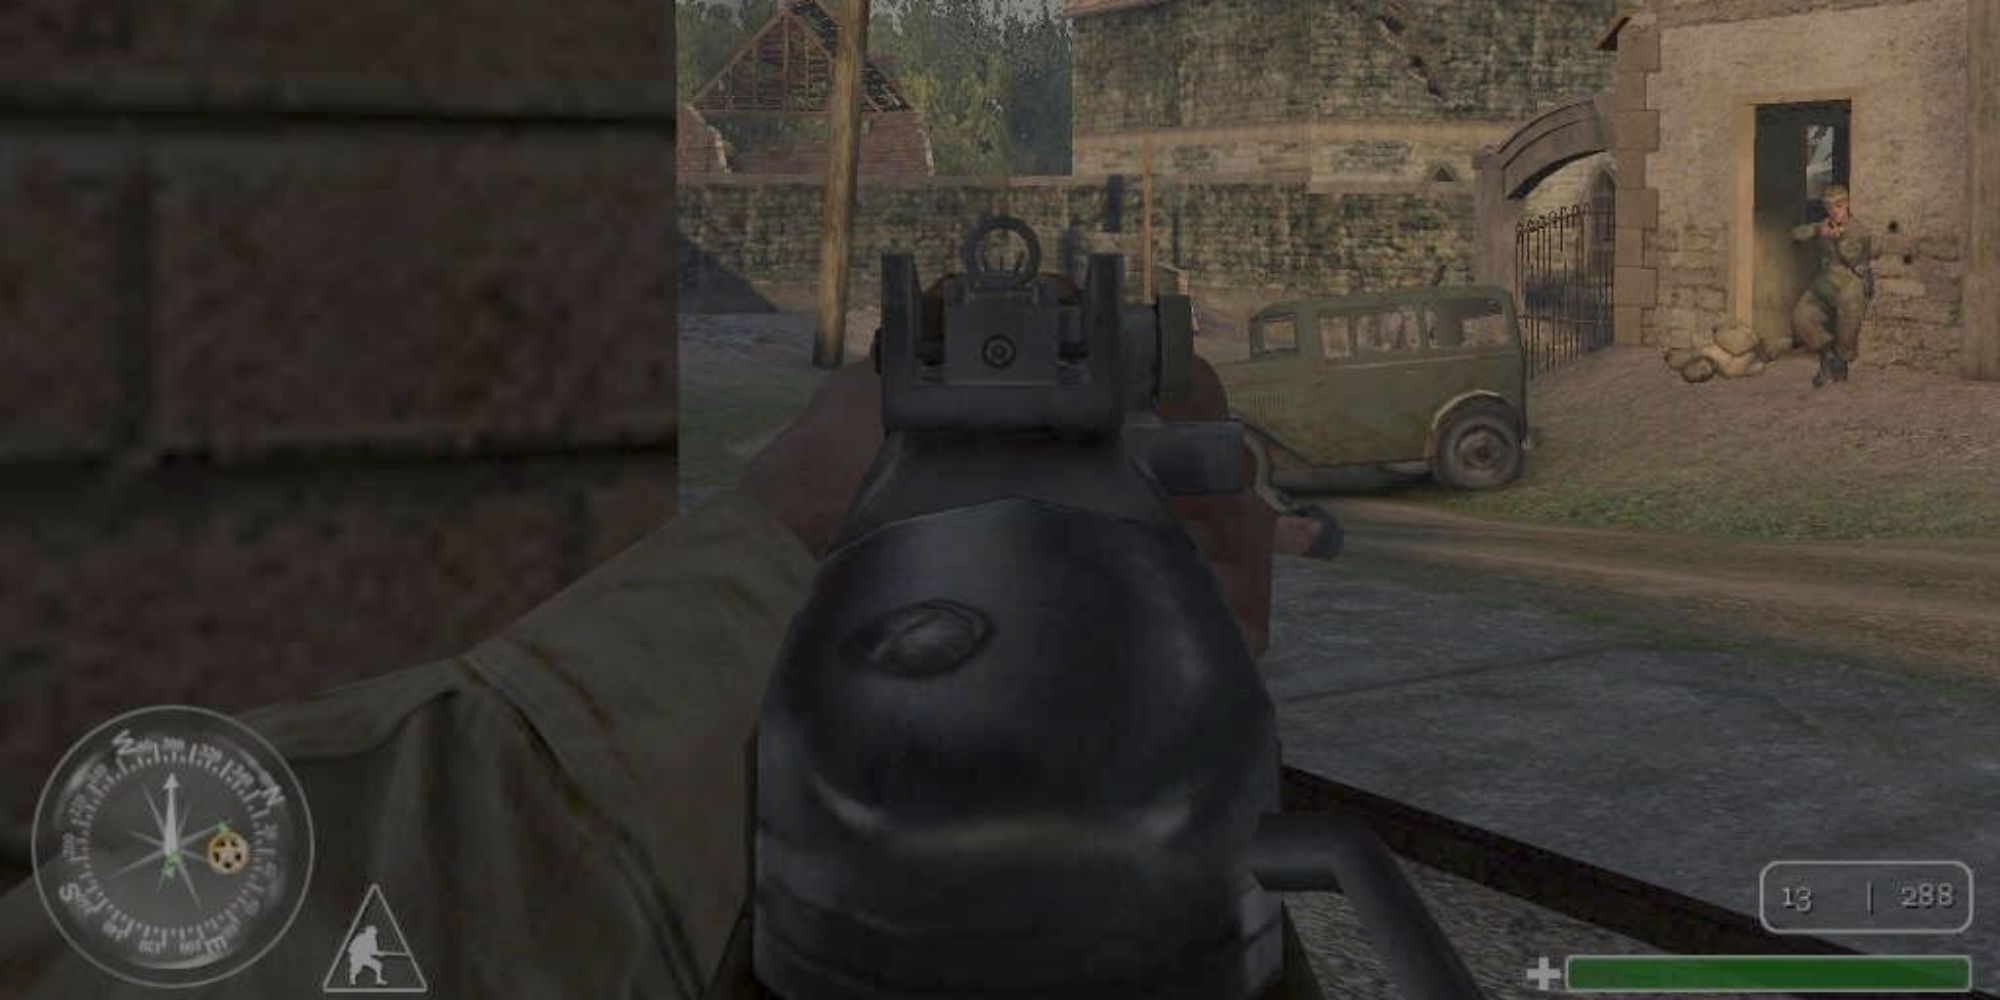 Screenshot Of Shooting Gun From The Original Call Of Duty